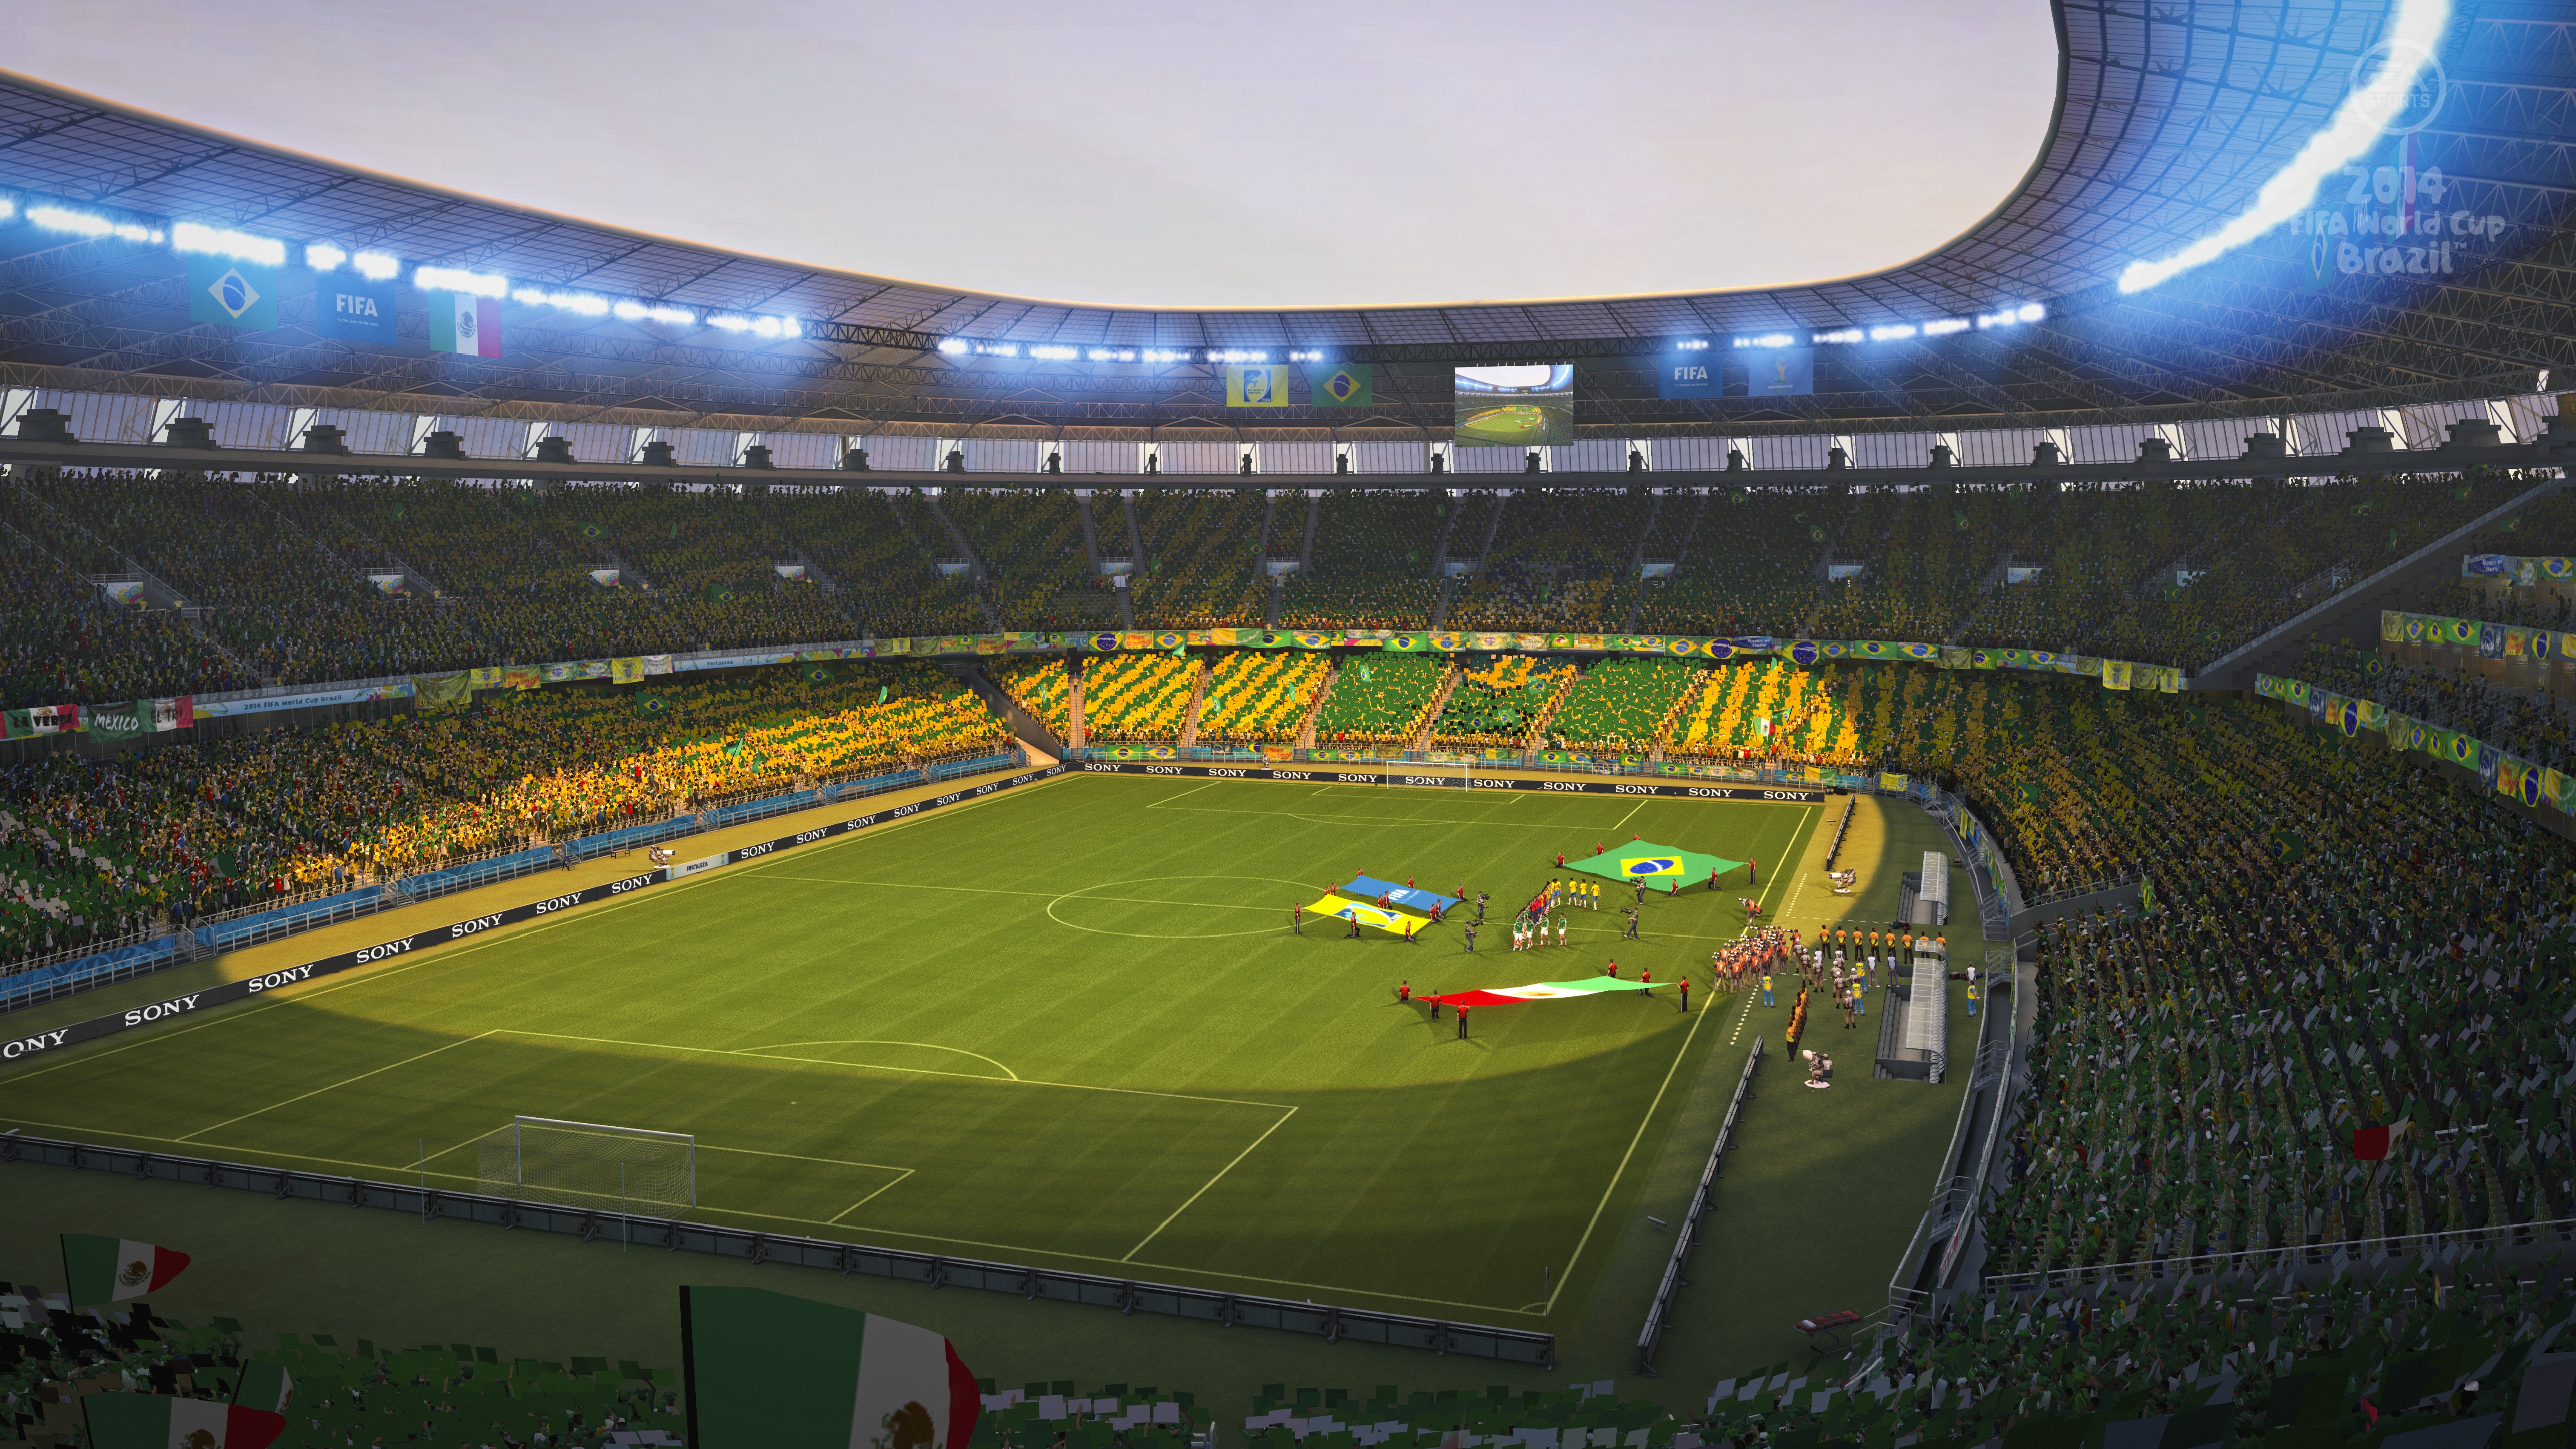 World cup 2014. ФИФА ворлд кап 2014. 2014 FIFA World Cup Brazil. 2014 FIFA World Cup Brazil для Xbox 360.